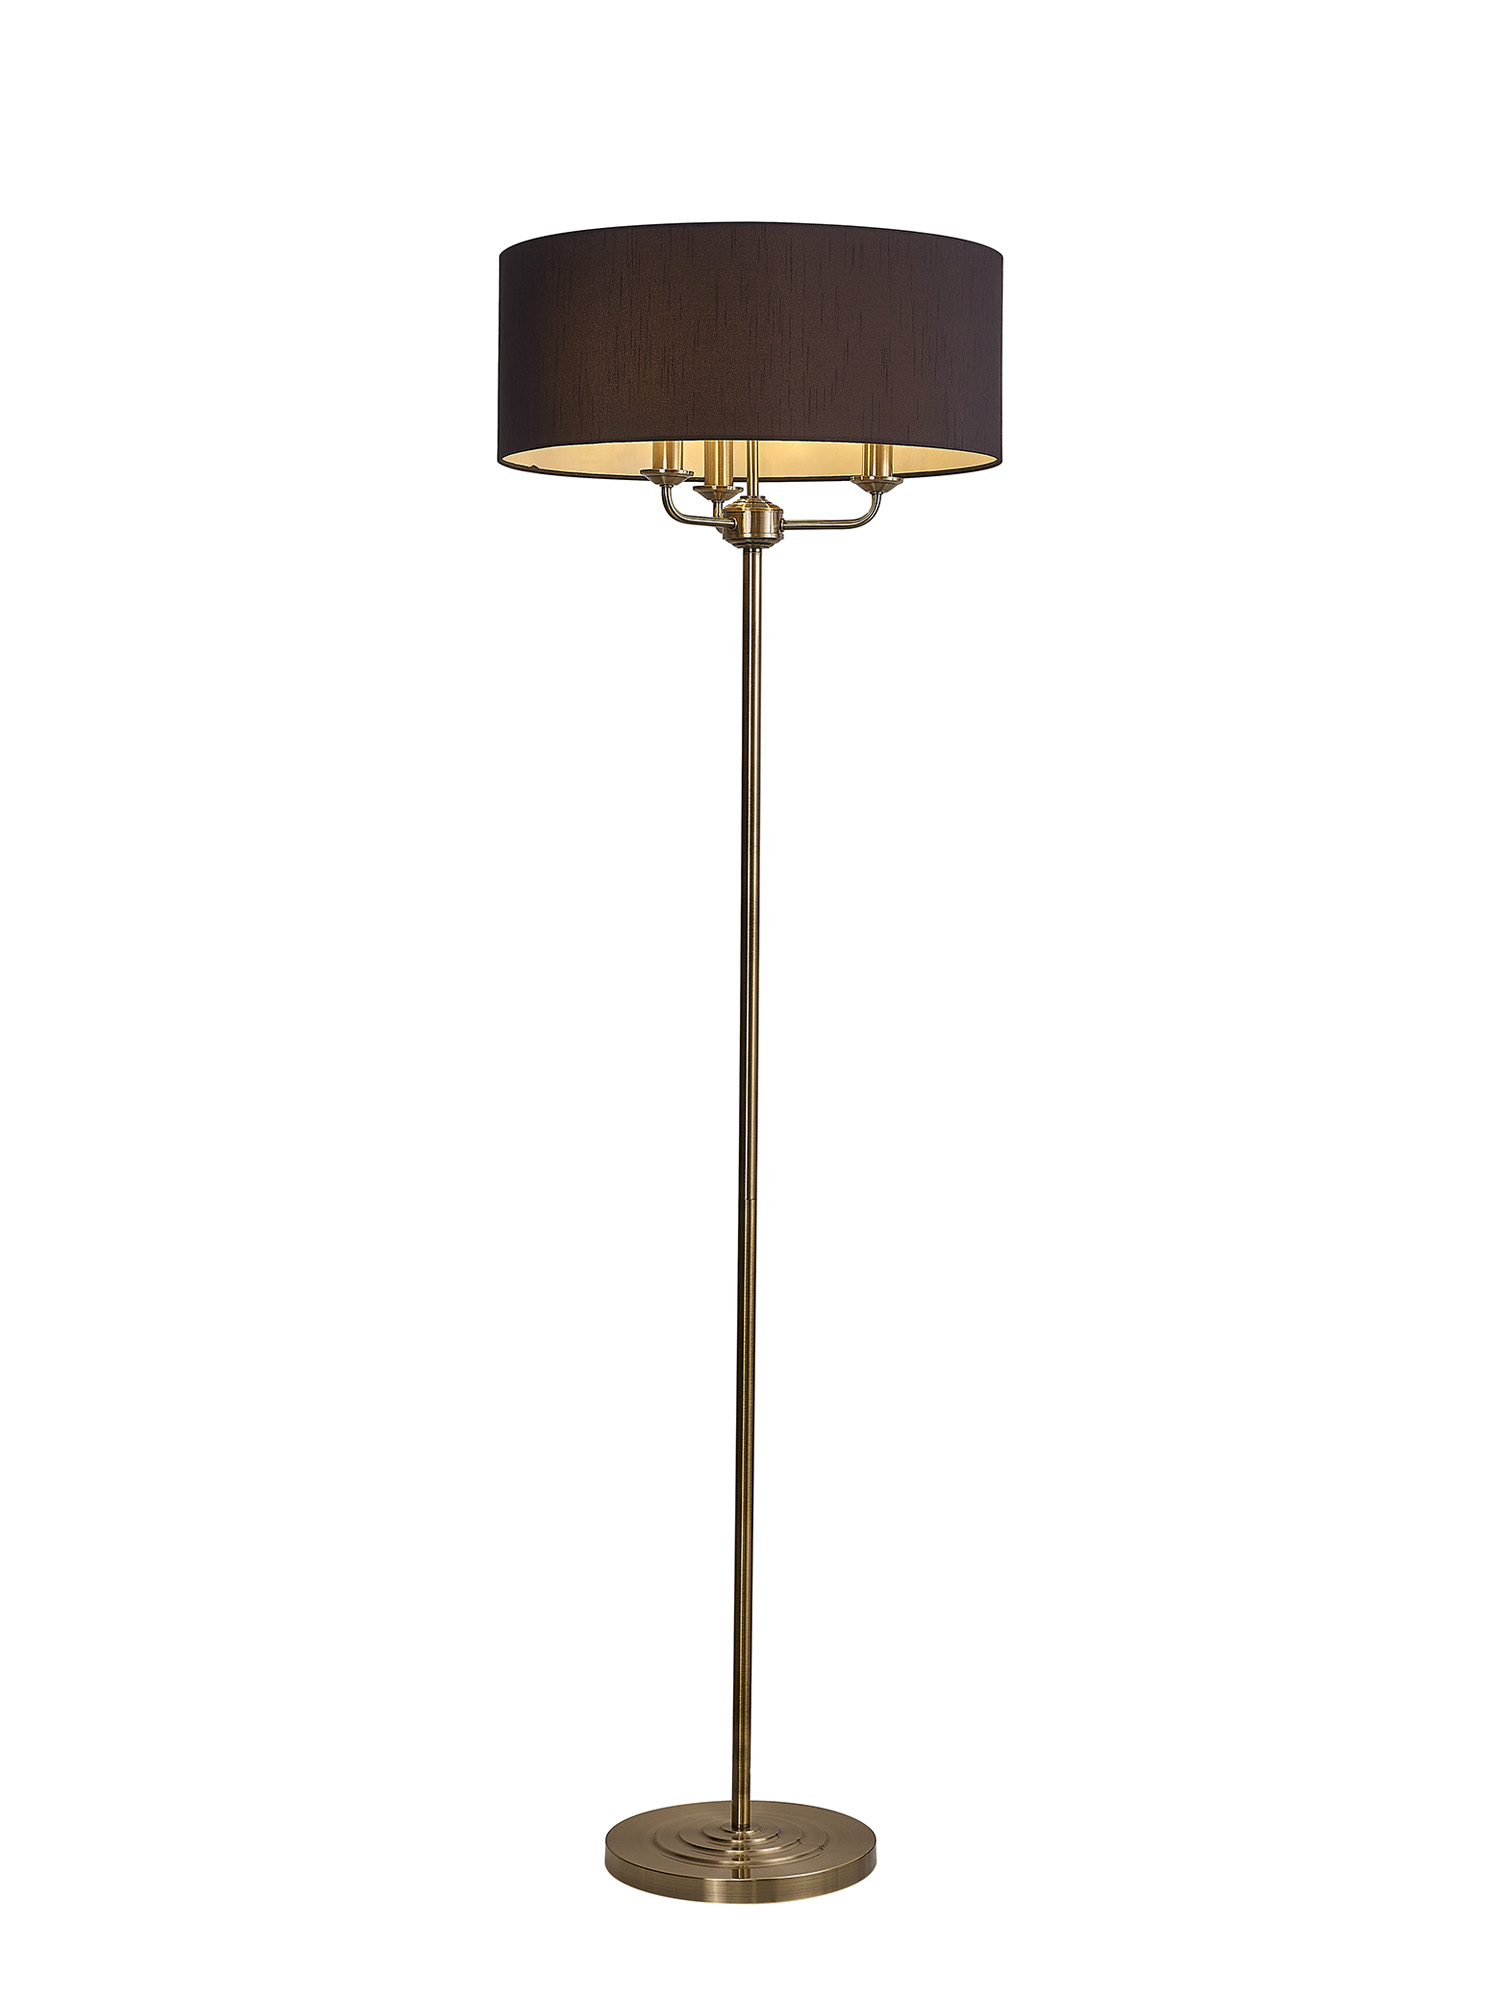 DK0912  Banyan 45cm 3 Light Floor Lamp Antique Brass, Black